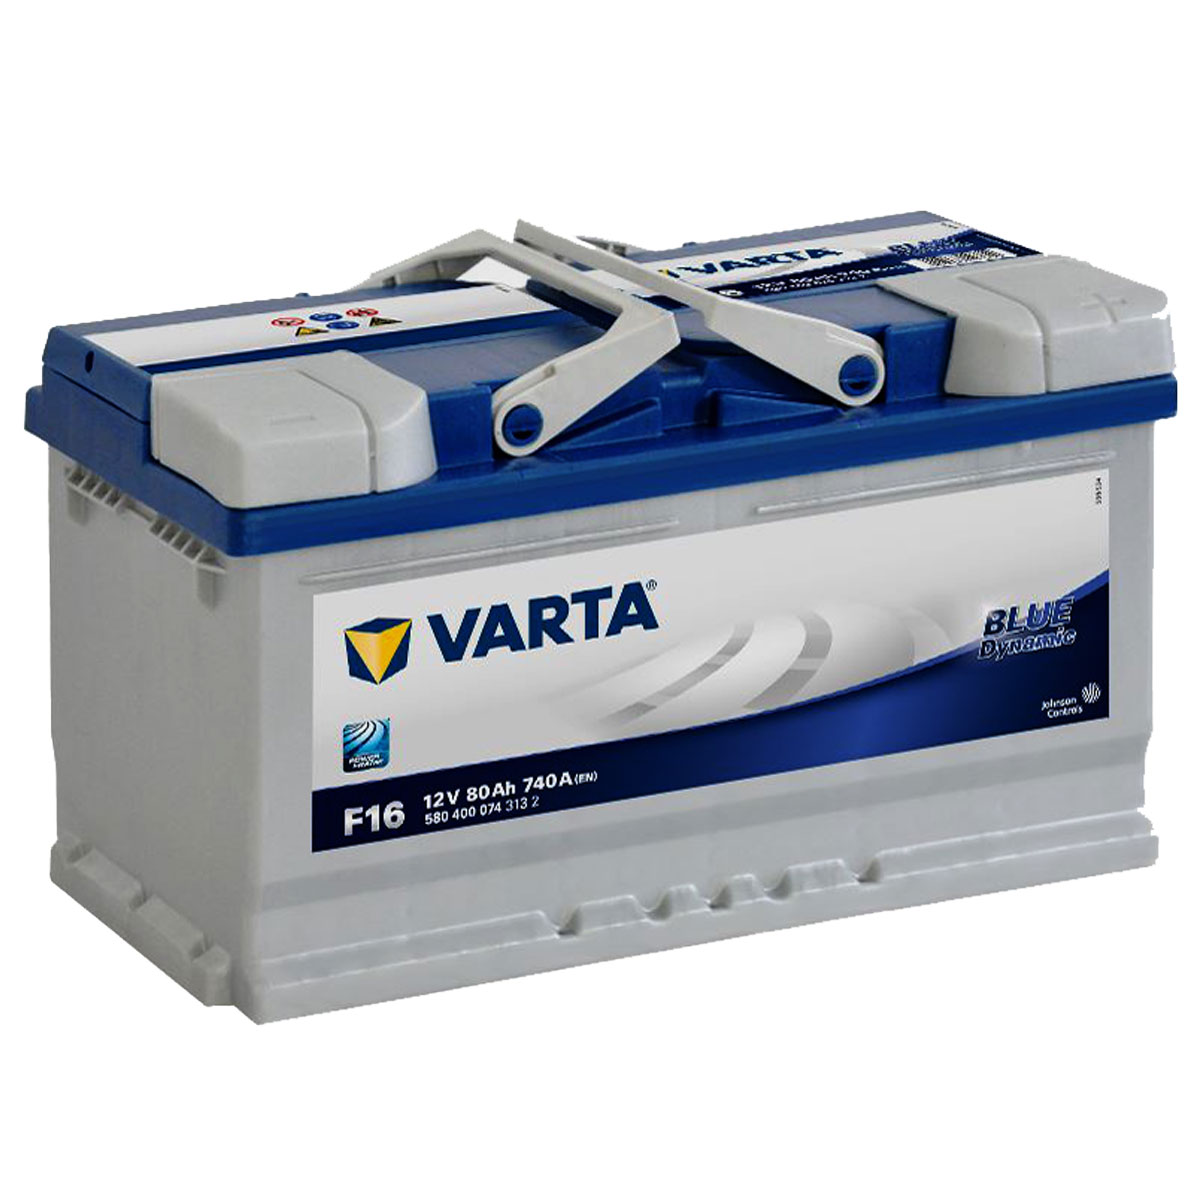 VARTA F16 Blue Dynamic 80Ah 740A Autobatterie 580 400 074